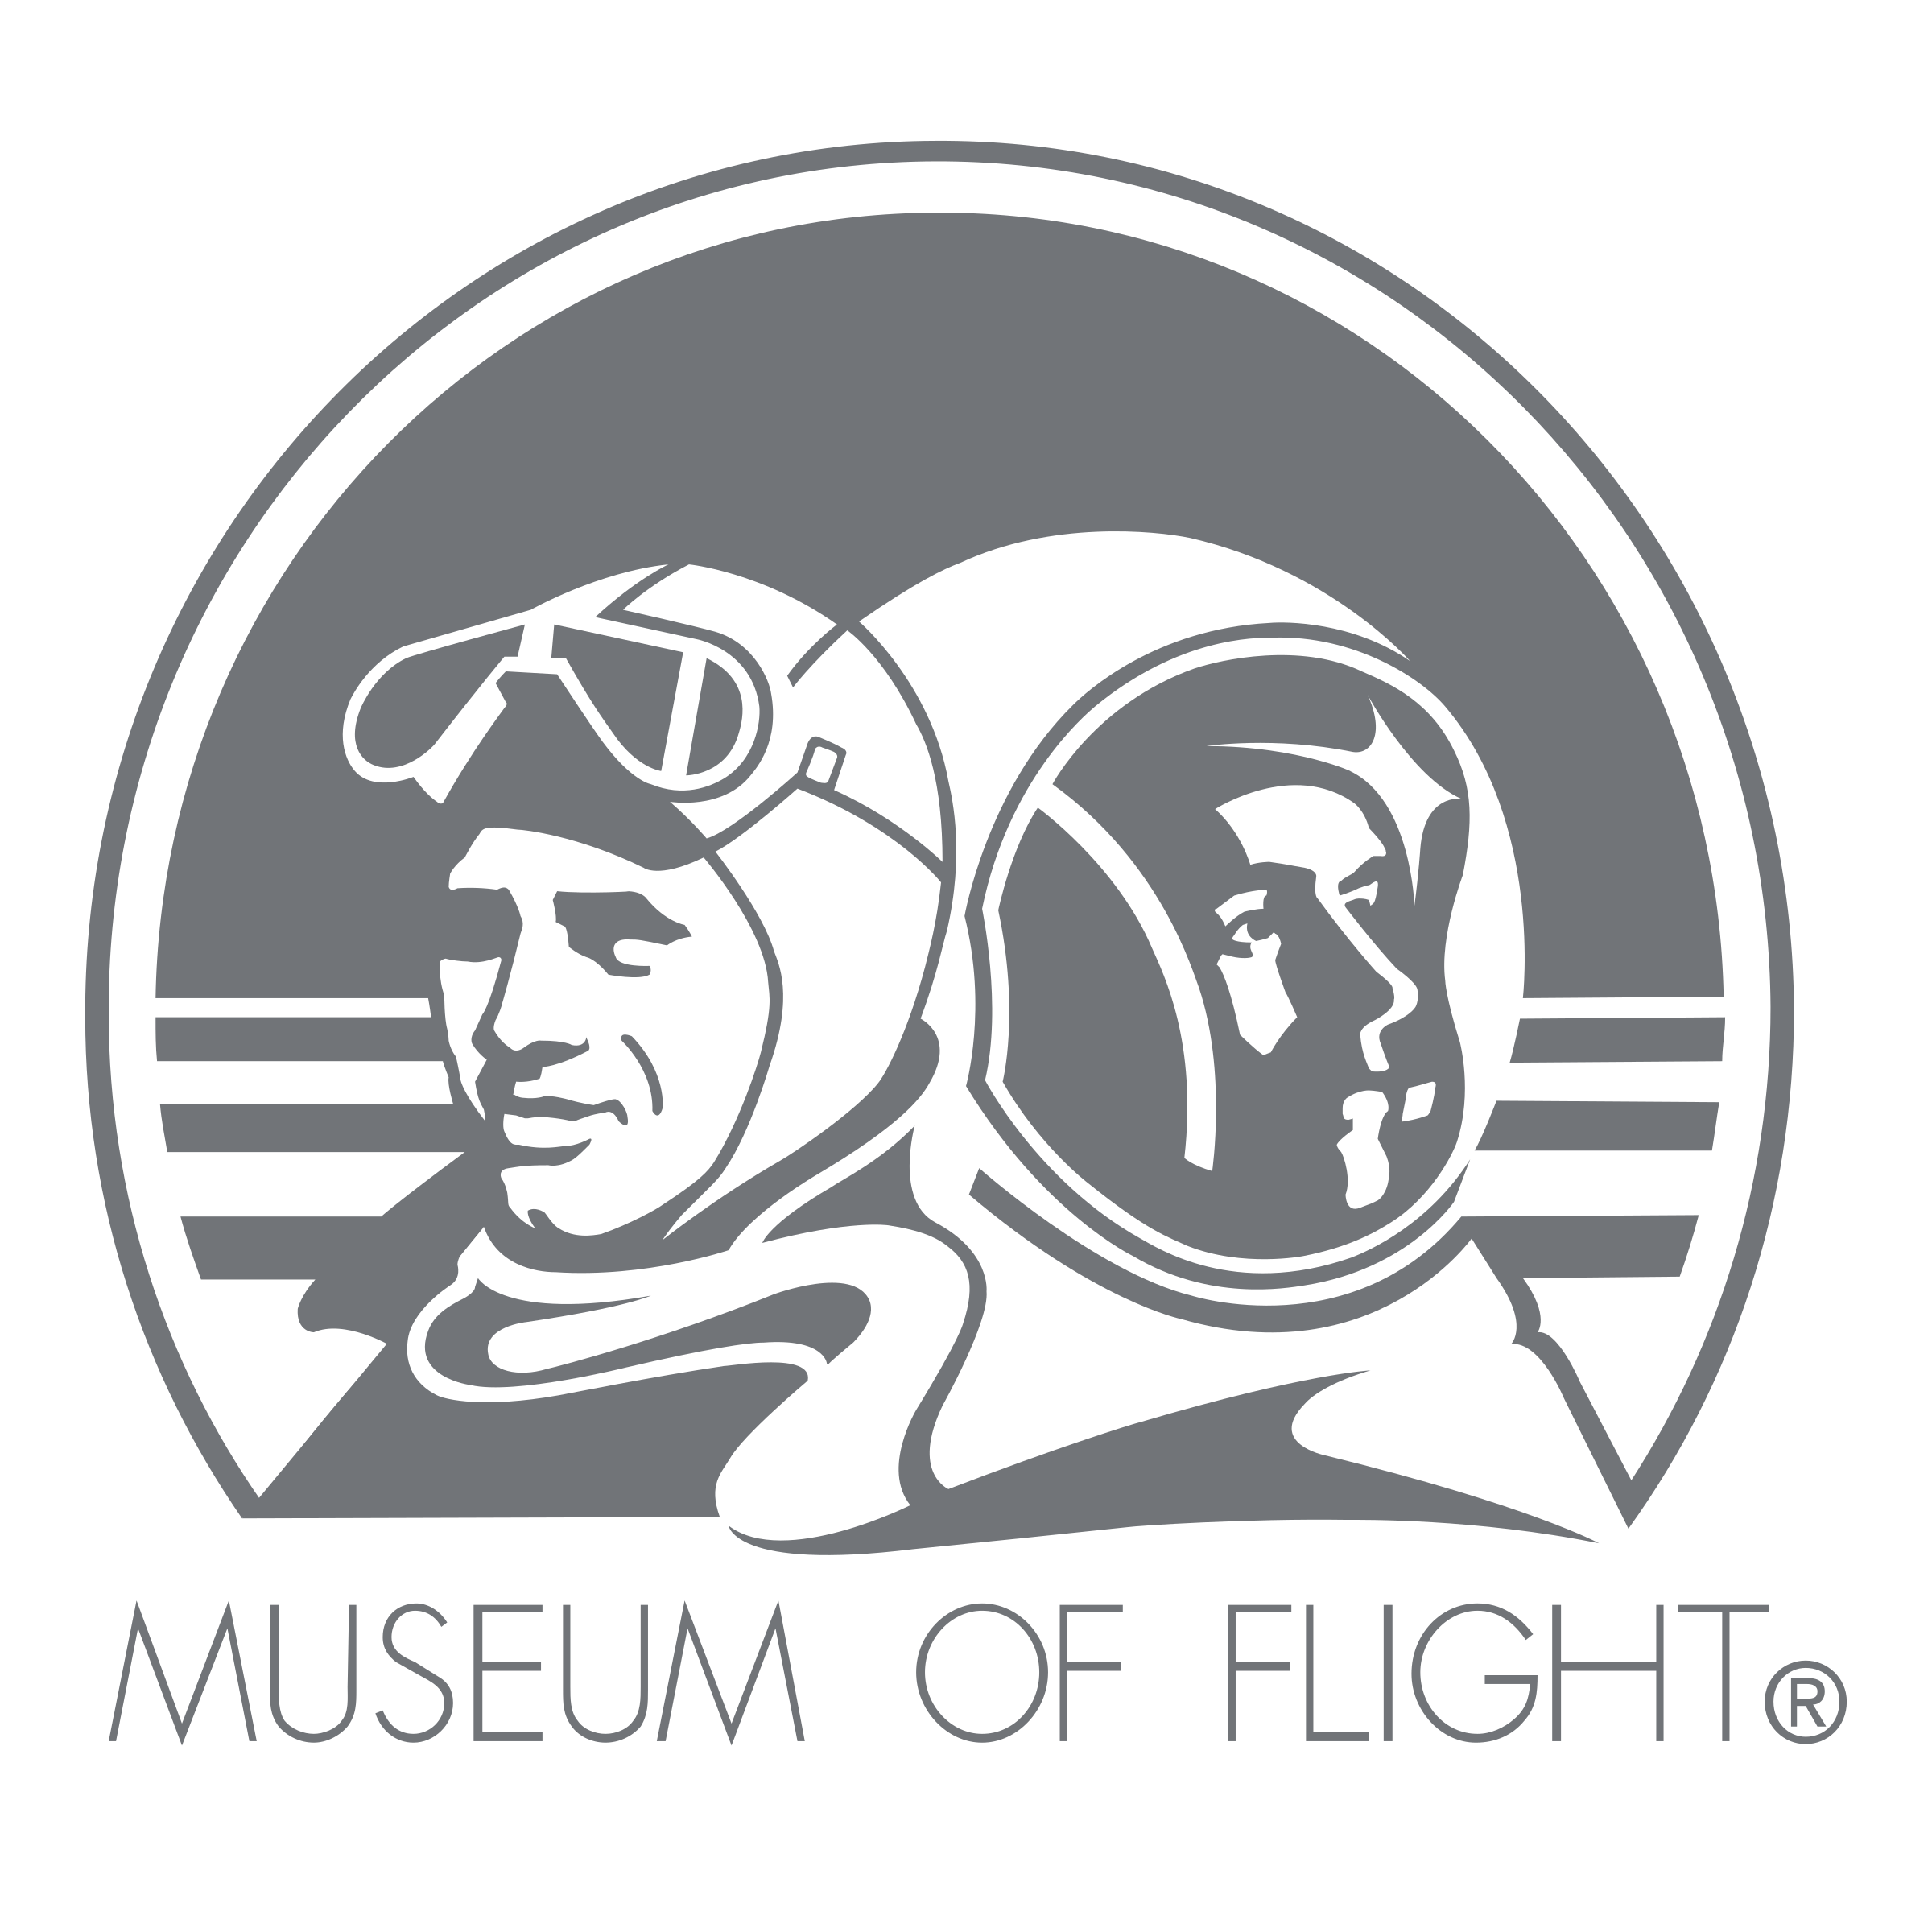 Museum of Flight Logo - Museum of Flight Logo PNG Transparent & SVG Vector - Freebie Supply